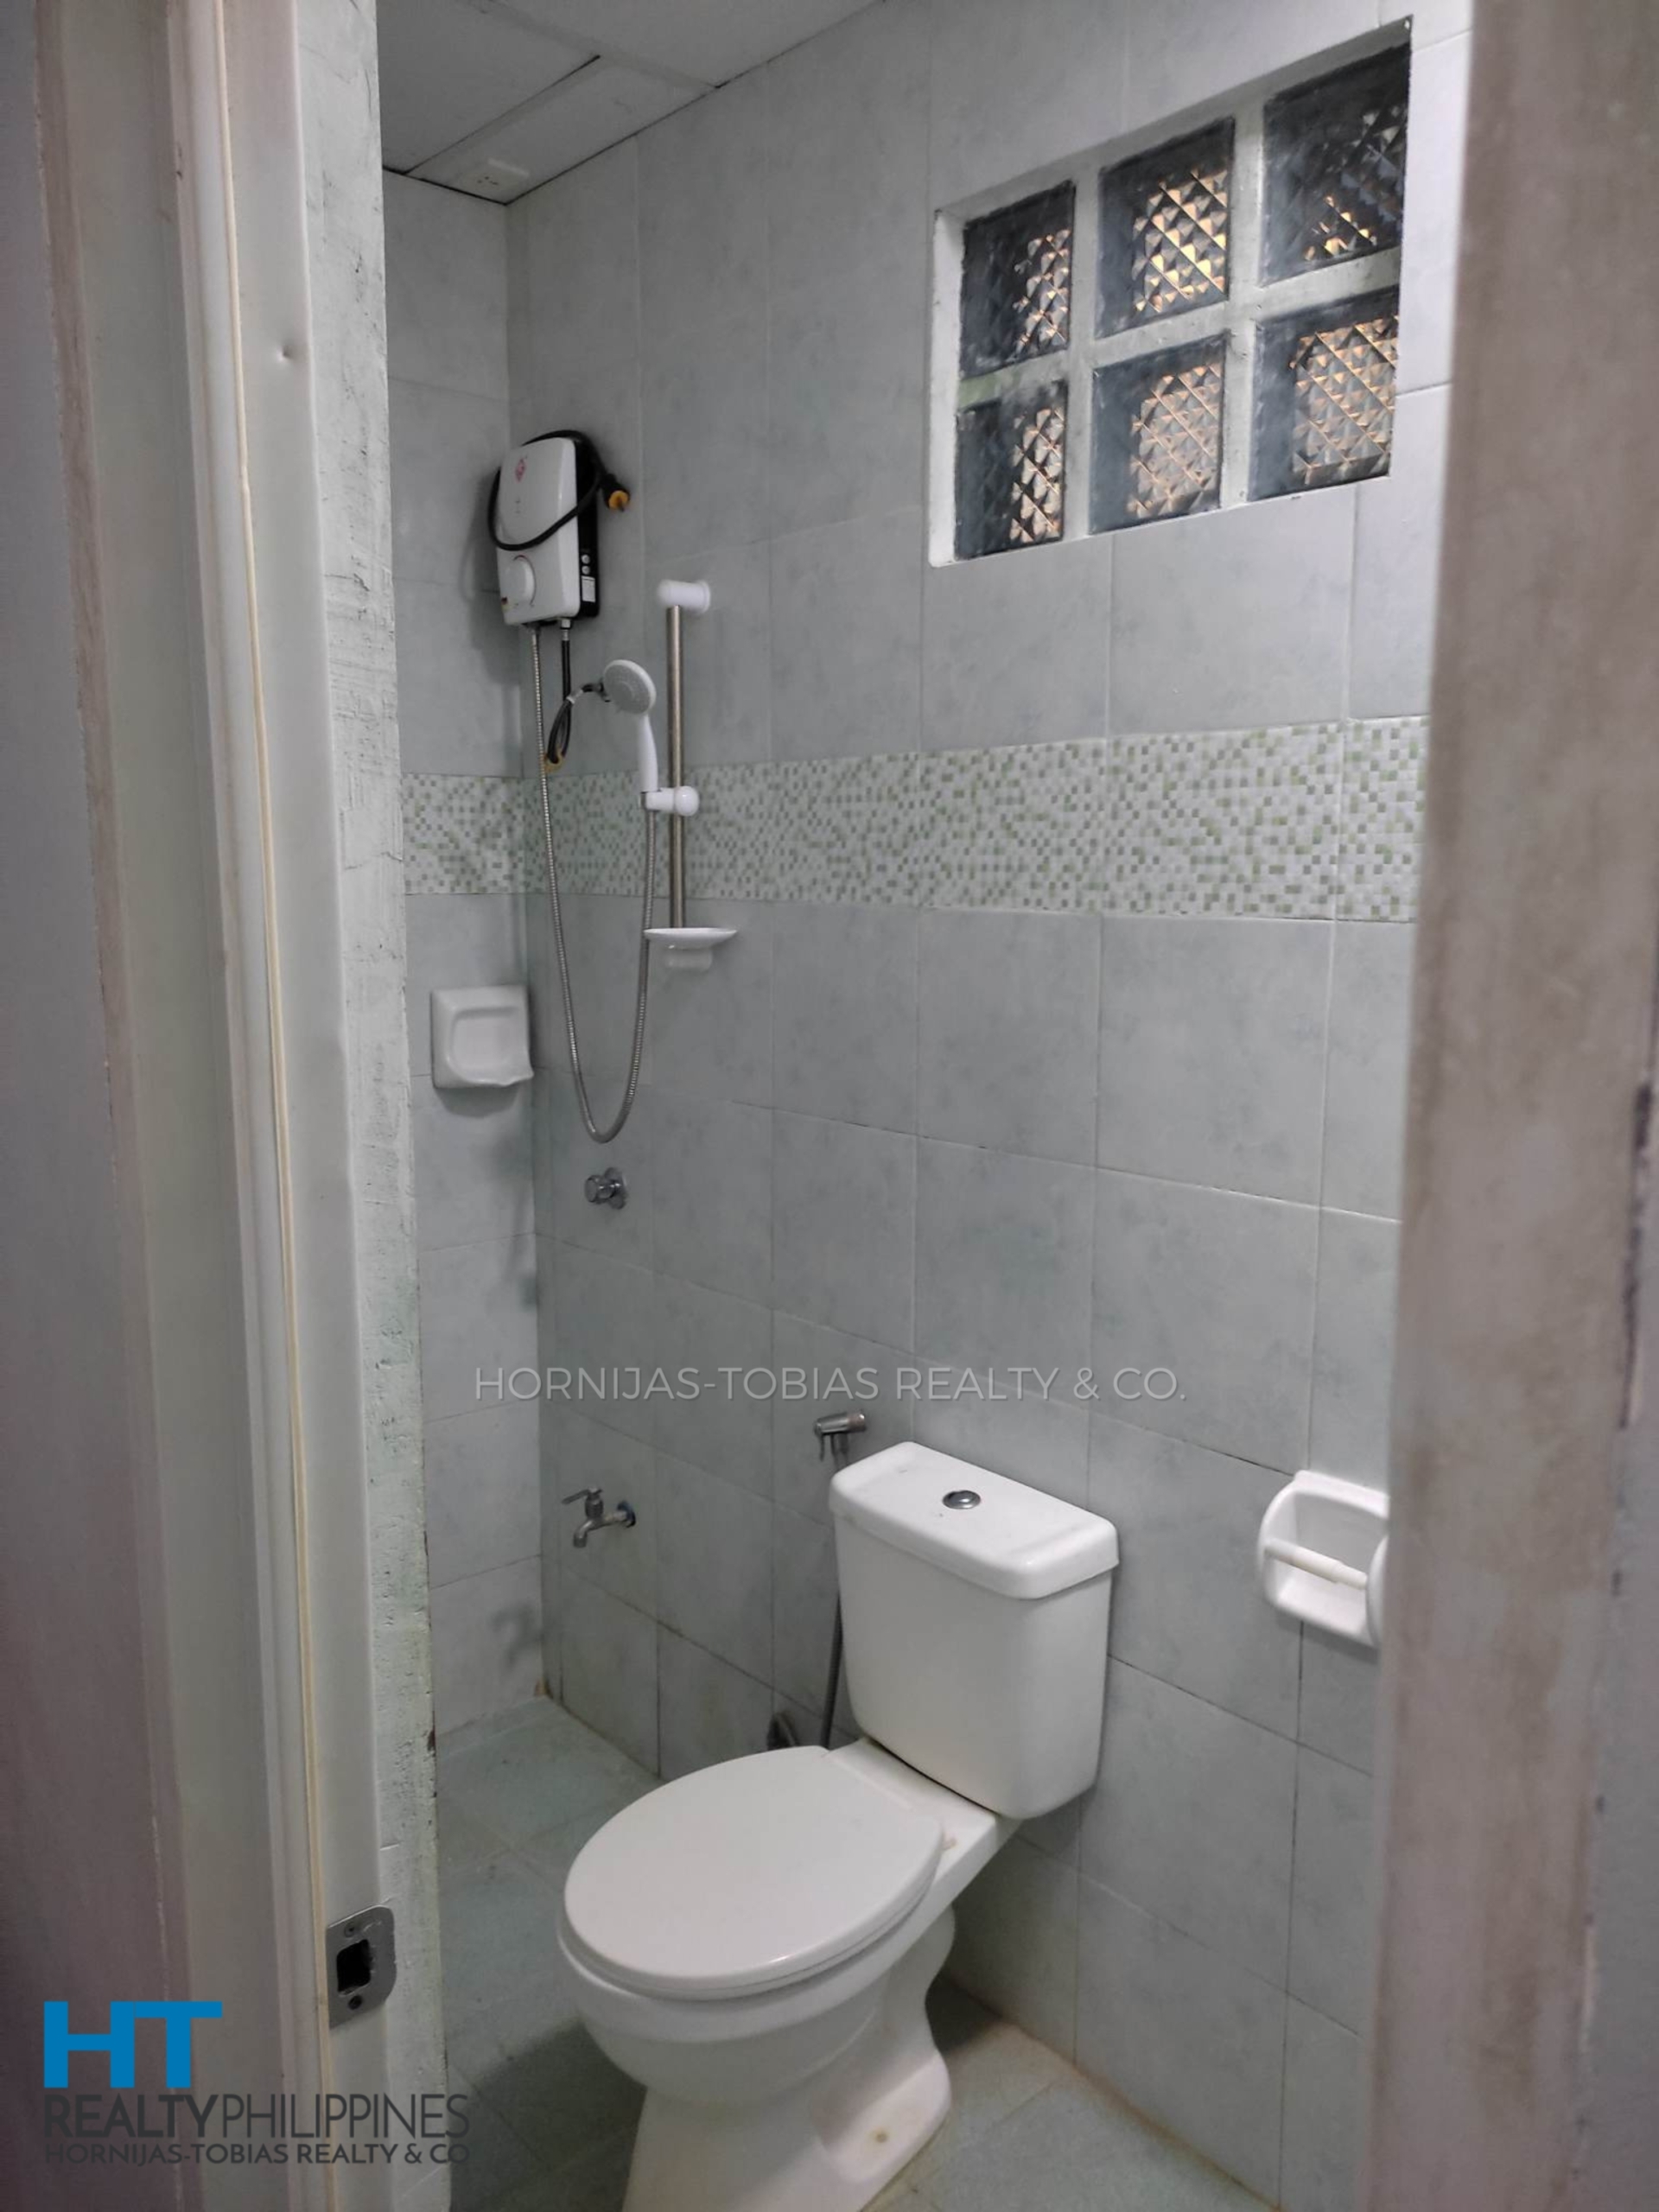 bathroom - 12-door 4-floor income-generating apartment building for sale in Buhangin, Davao City